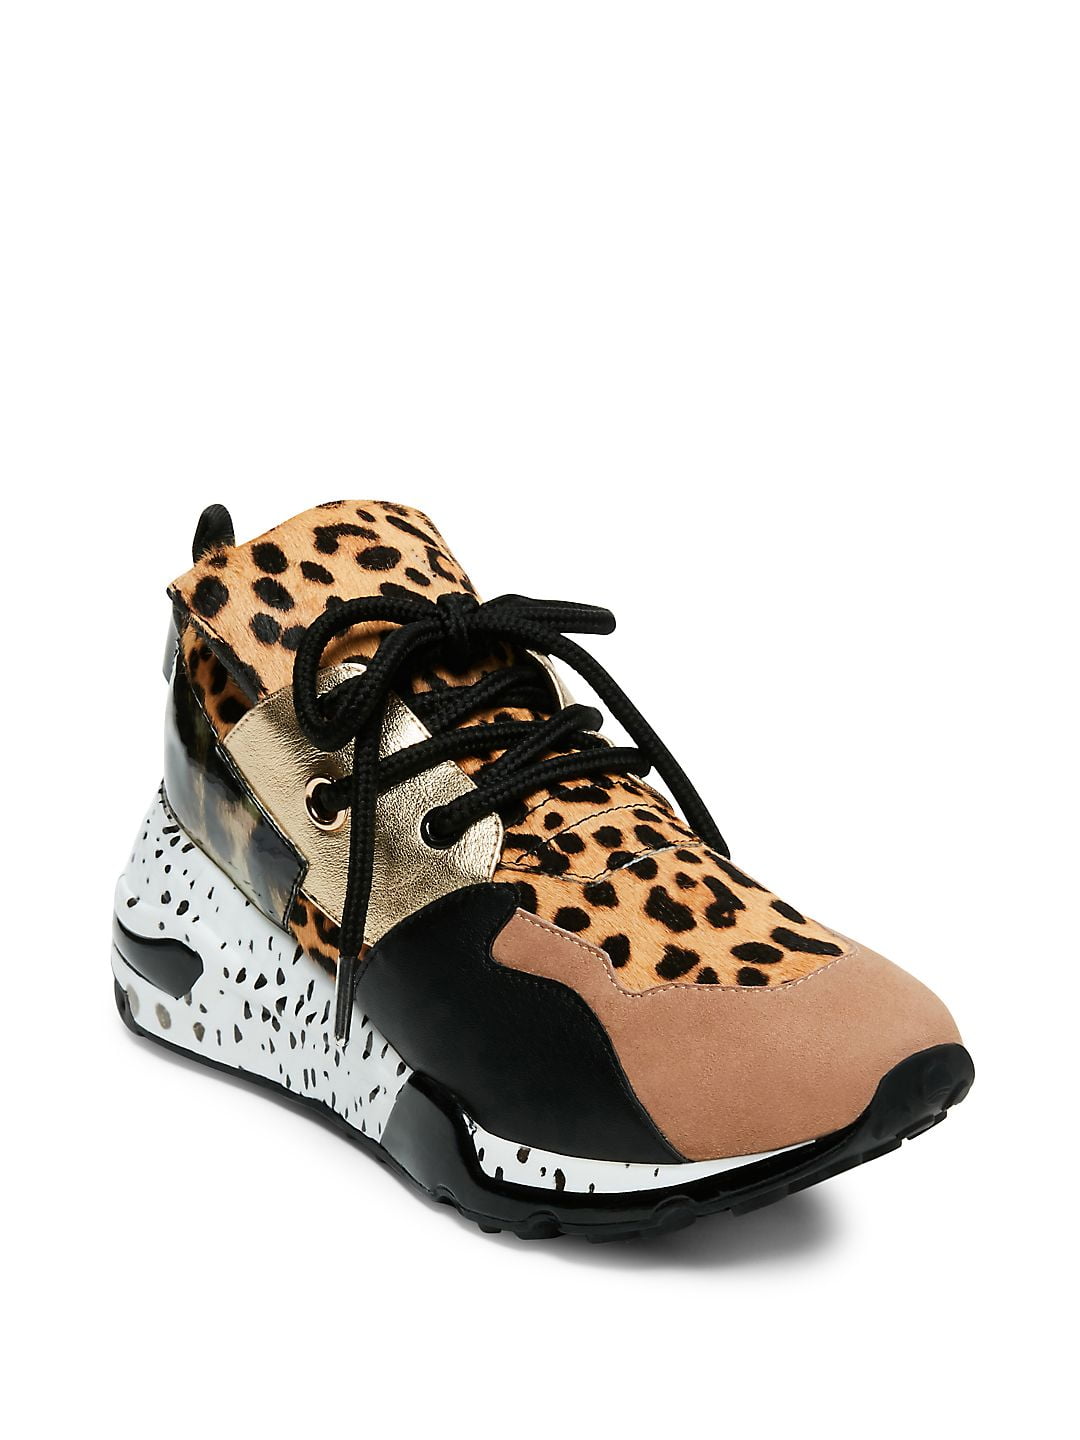 Estado pala oficina postal Steve Madden Women's Cliff Leather Leopard Print Lace-Up Sneaker -  Walmart.com